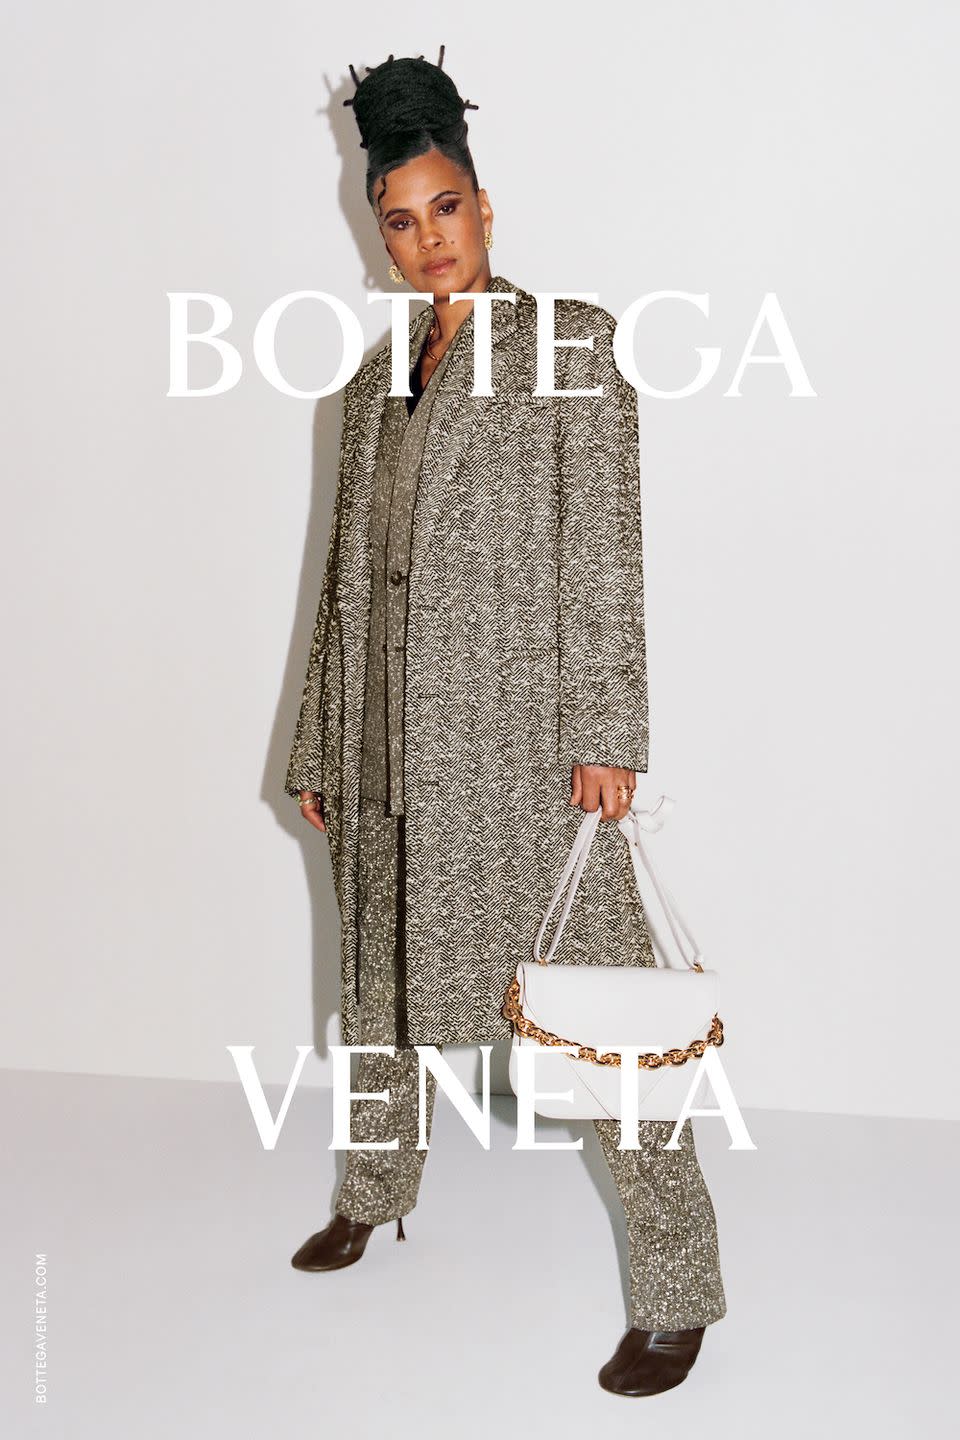 Bottega Veneta's Wardrobe 02 Campaign